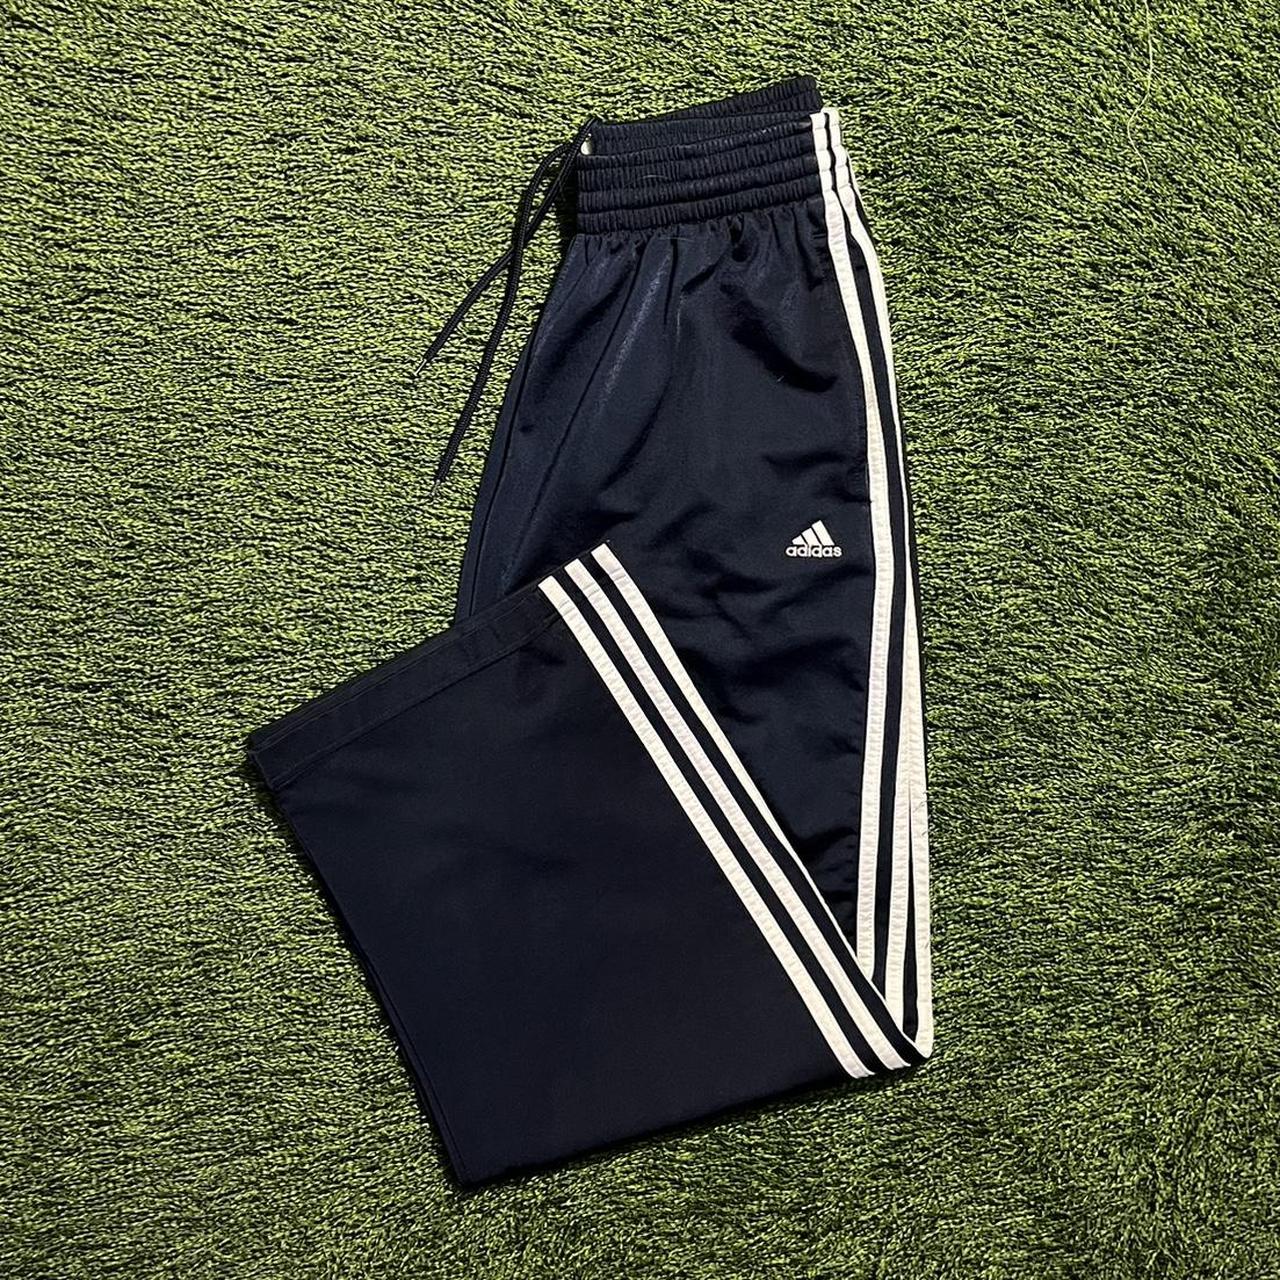 Adidas 3 stripes sweatpants. Size medium. May have... - Depop